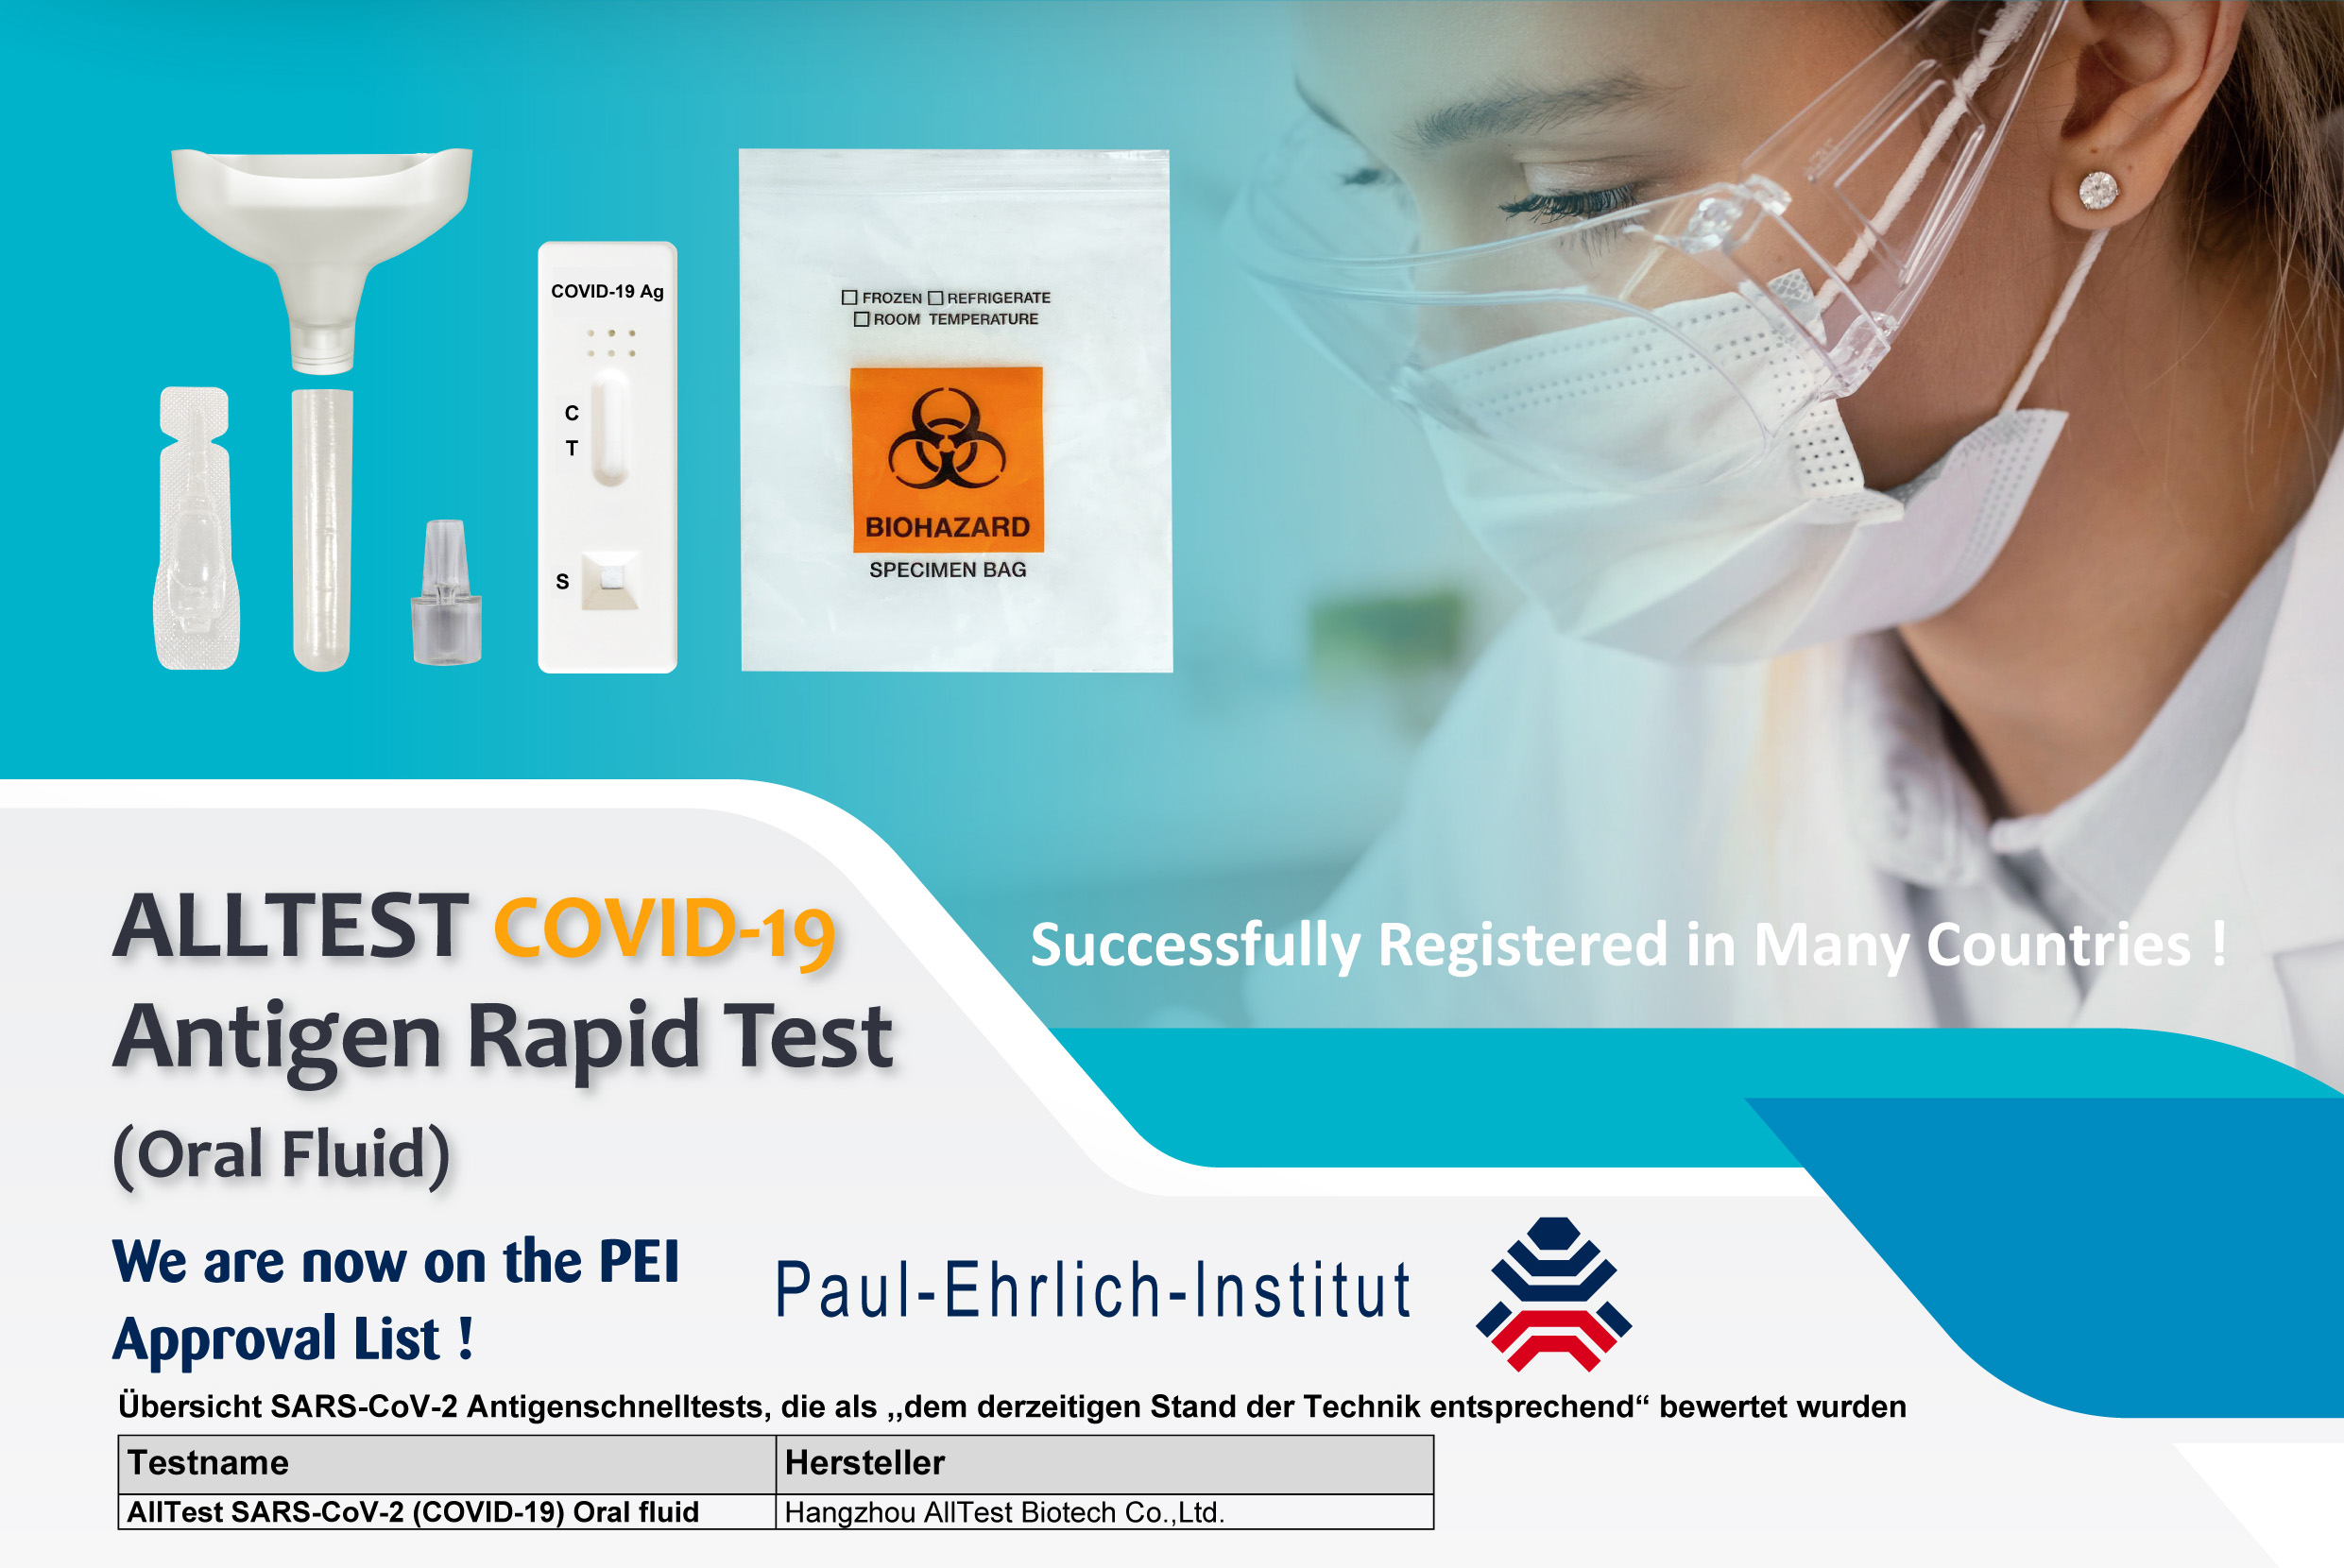 Alltest covid-19 antigen rapid test